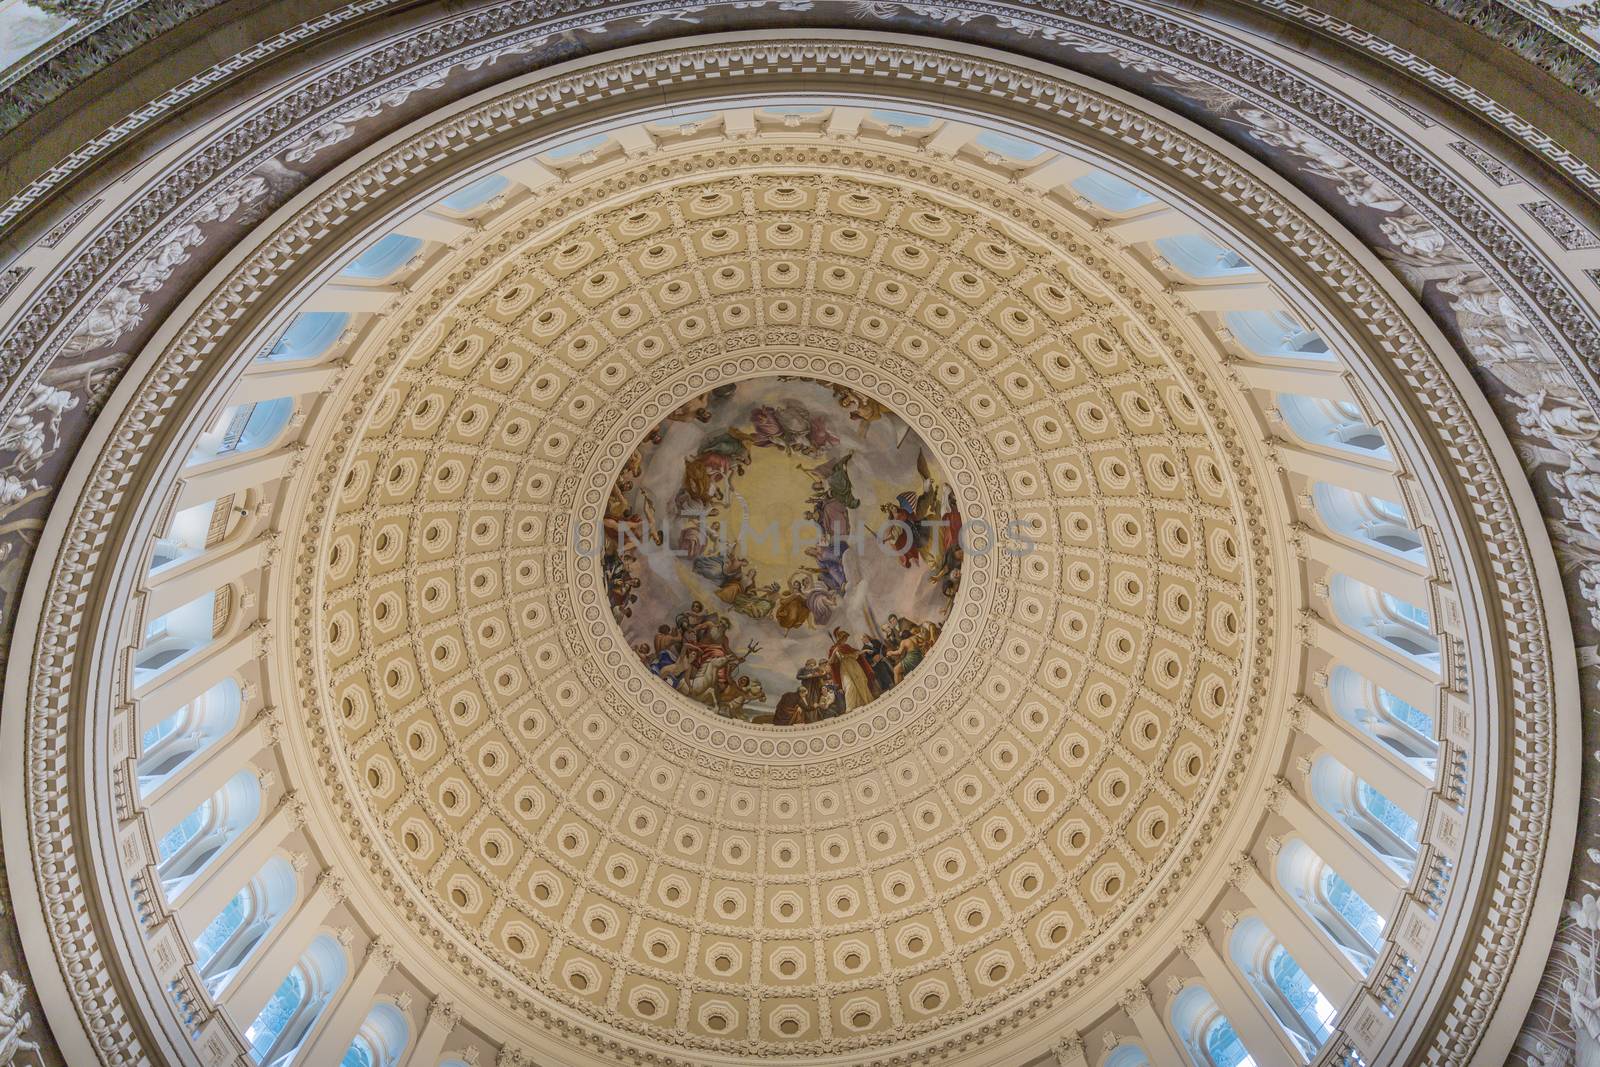 Inside the dome and rotunda of the Washington DC Landmark